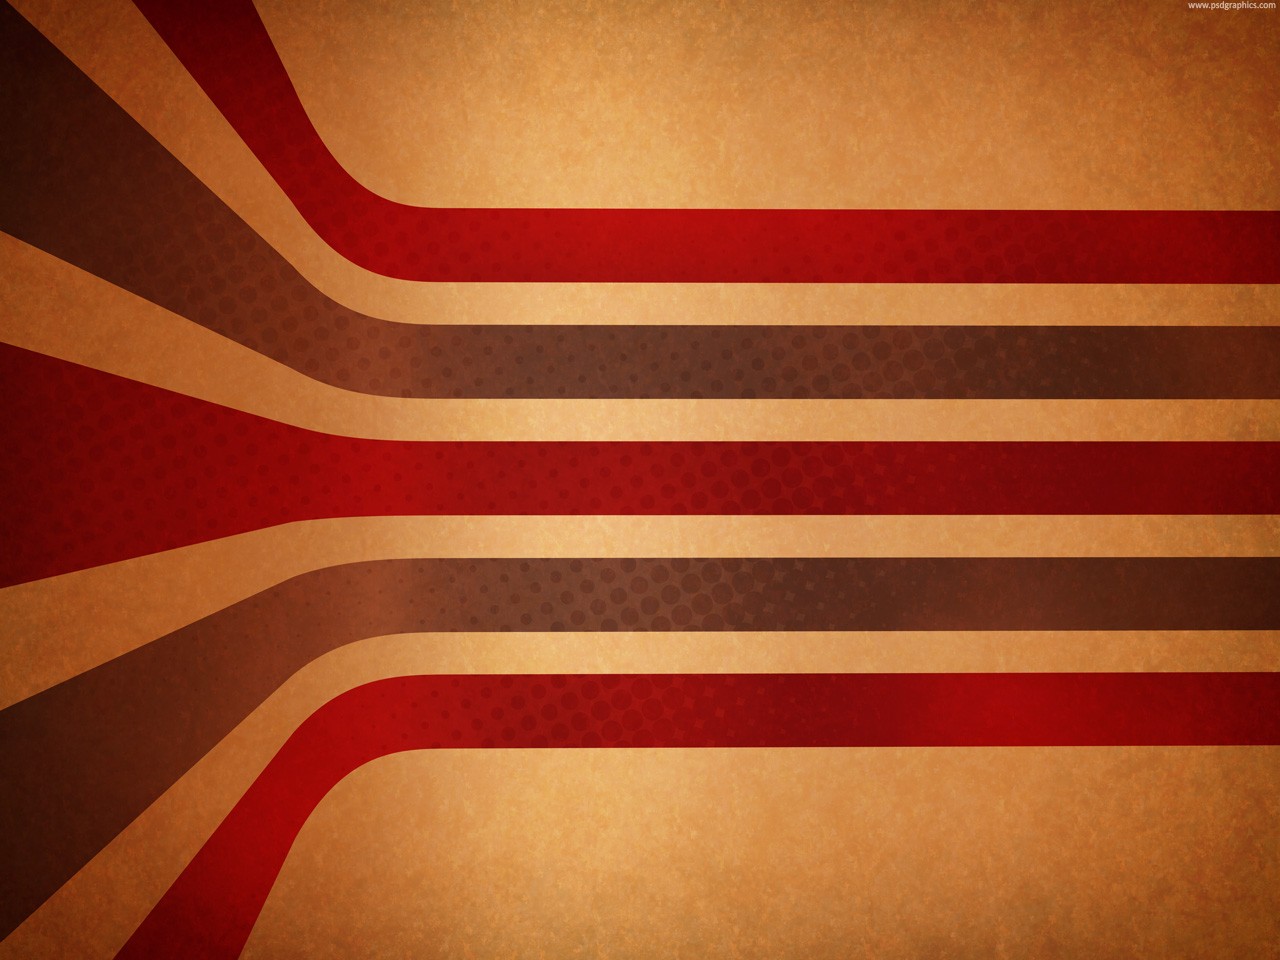 General 1280x960 stripes lines artwork orange red